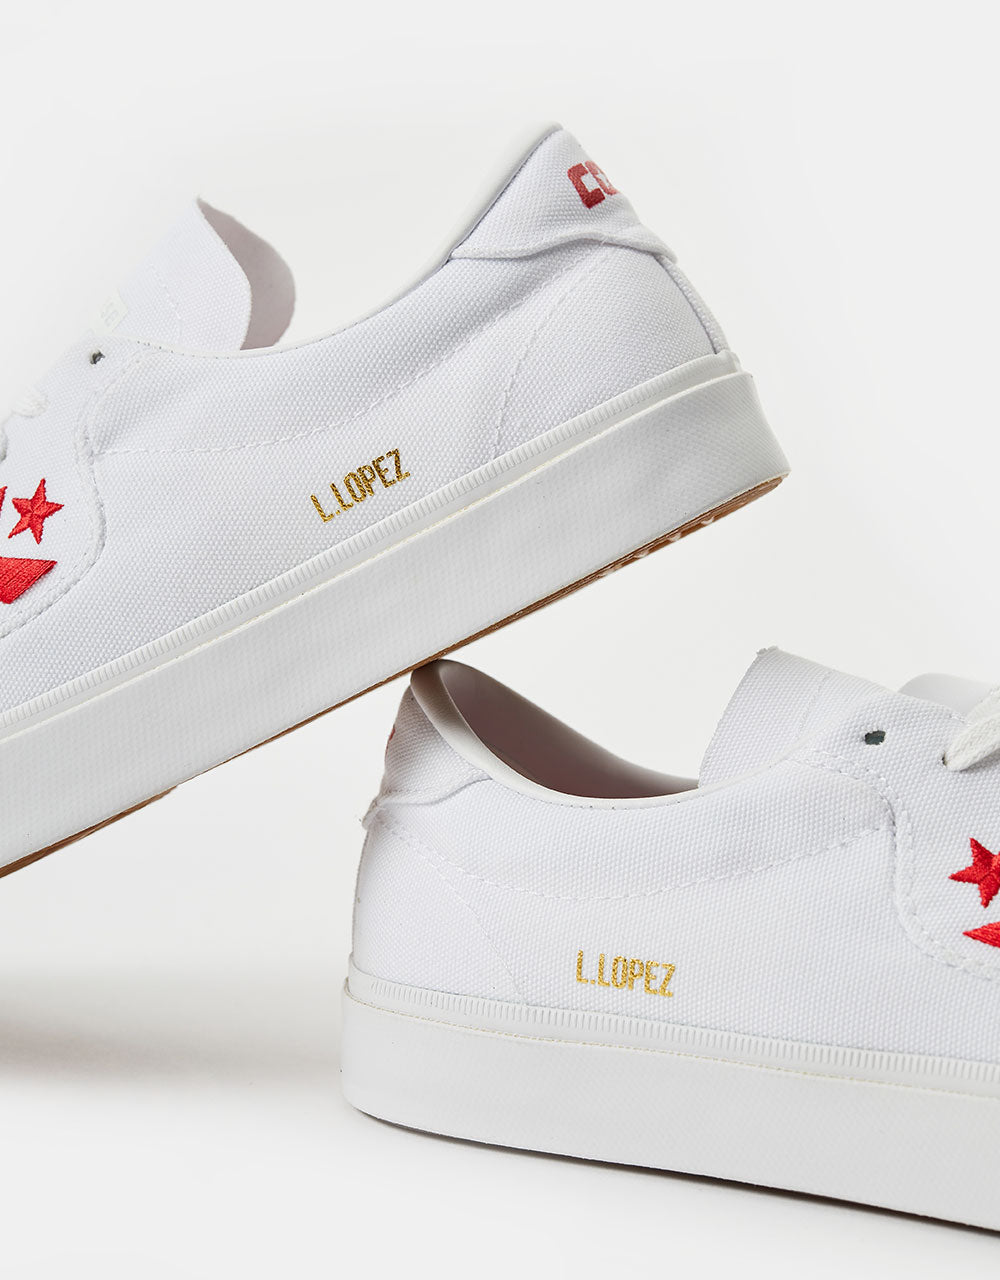 Converse Louie Lopez Pro Ox Canvas Skate Shoes - White/Red/White